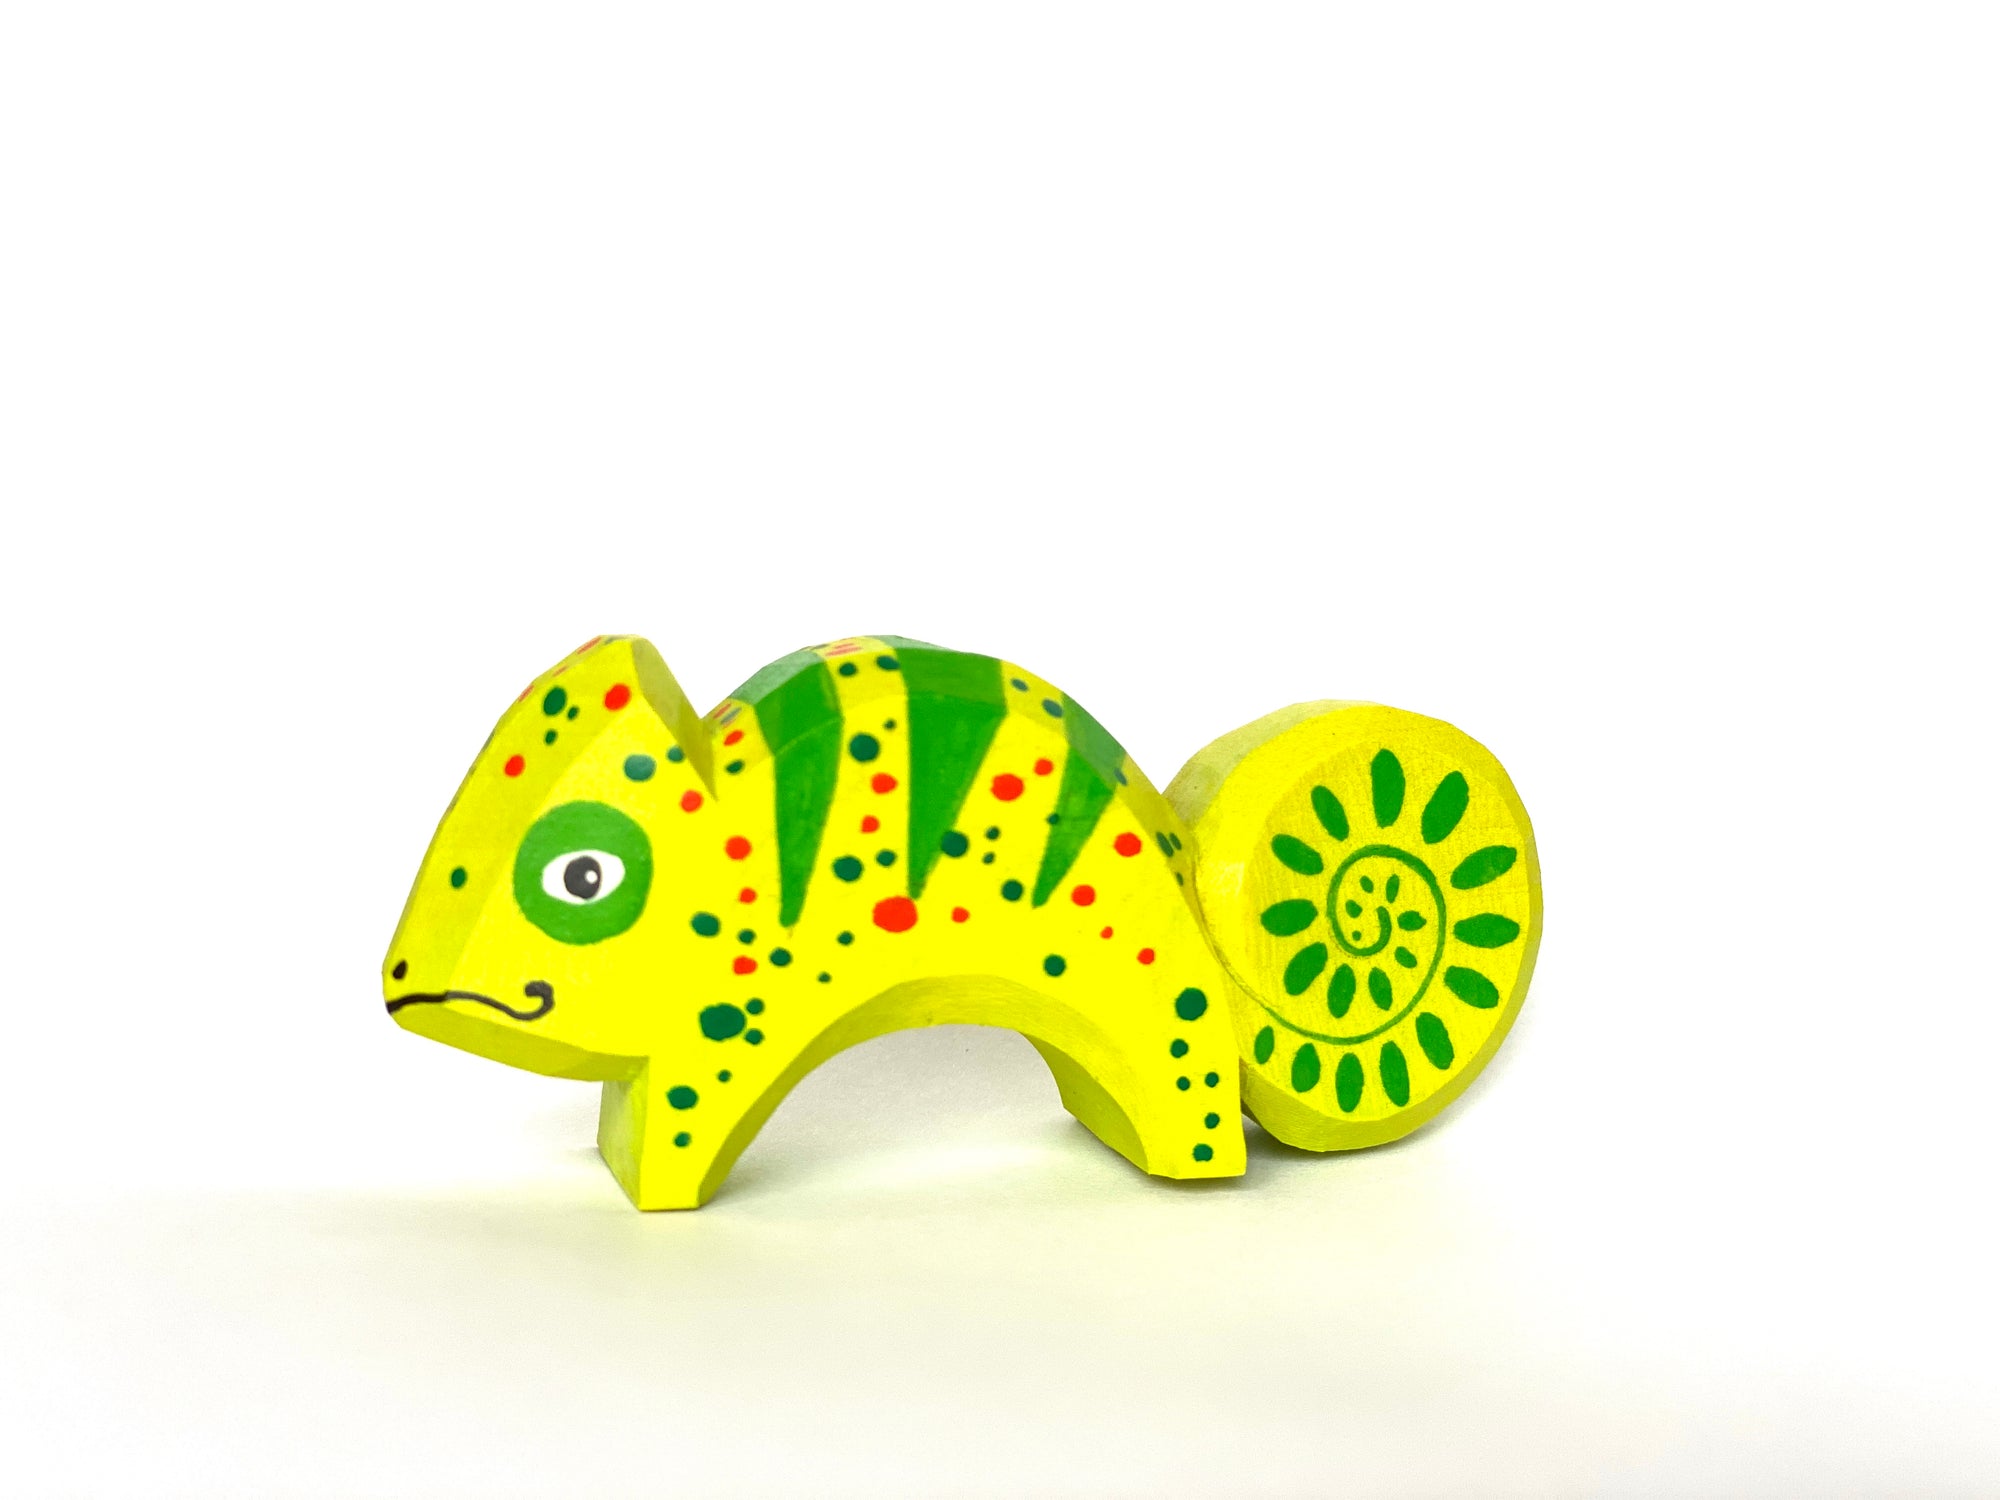 Safari Ltd. Veiled Chameleon Baby Figurine - Detailed 6.75 Plastic Model  Figure - Fun Educational Play Toy for Boys, Girls & Kids Ages 18M+